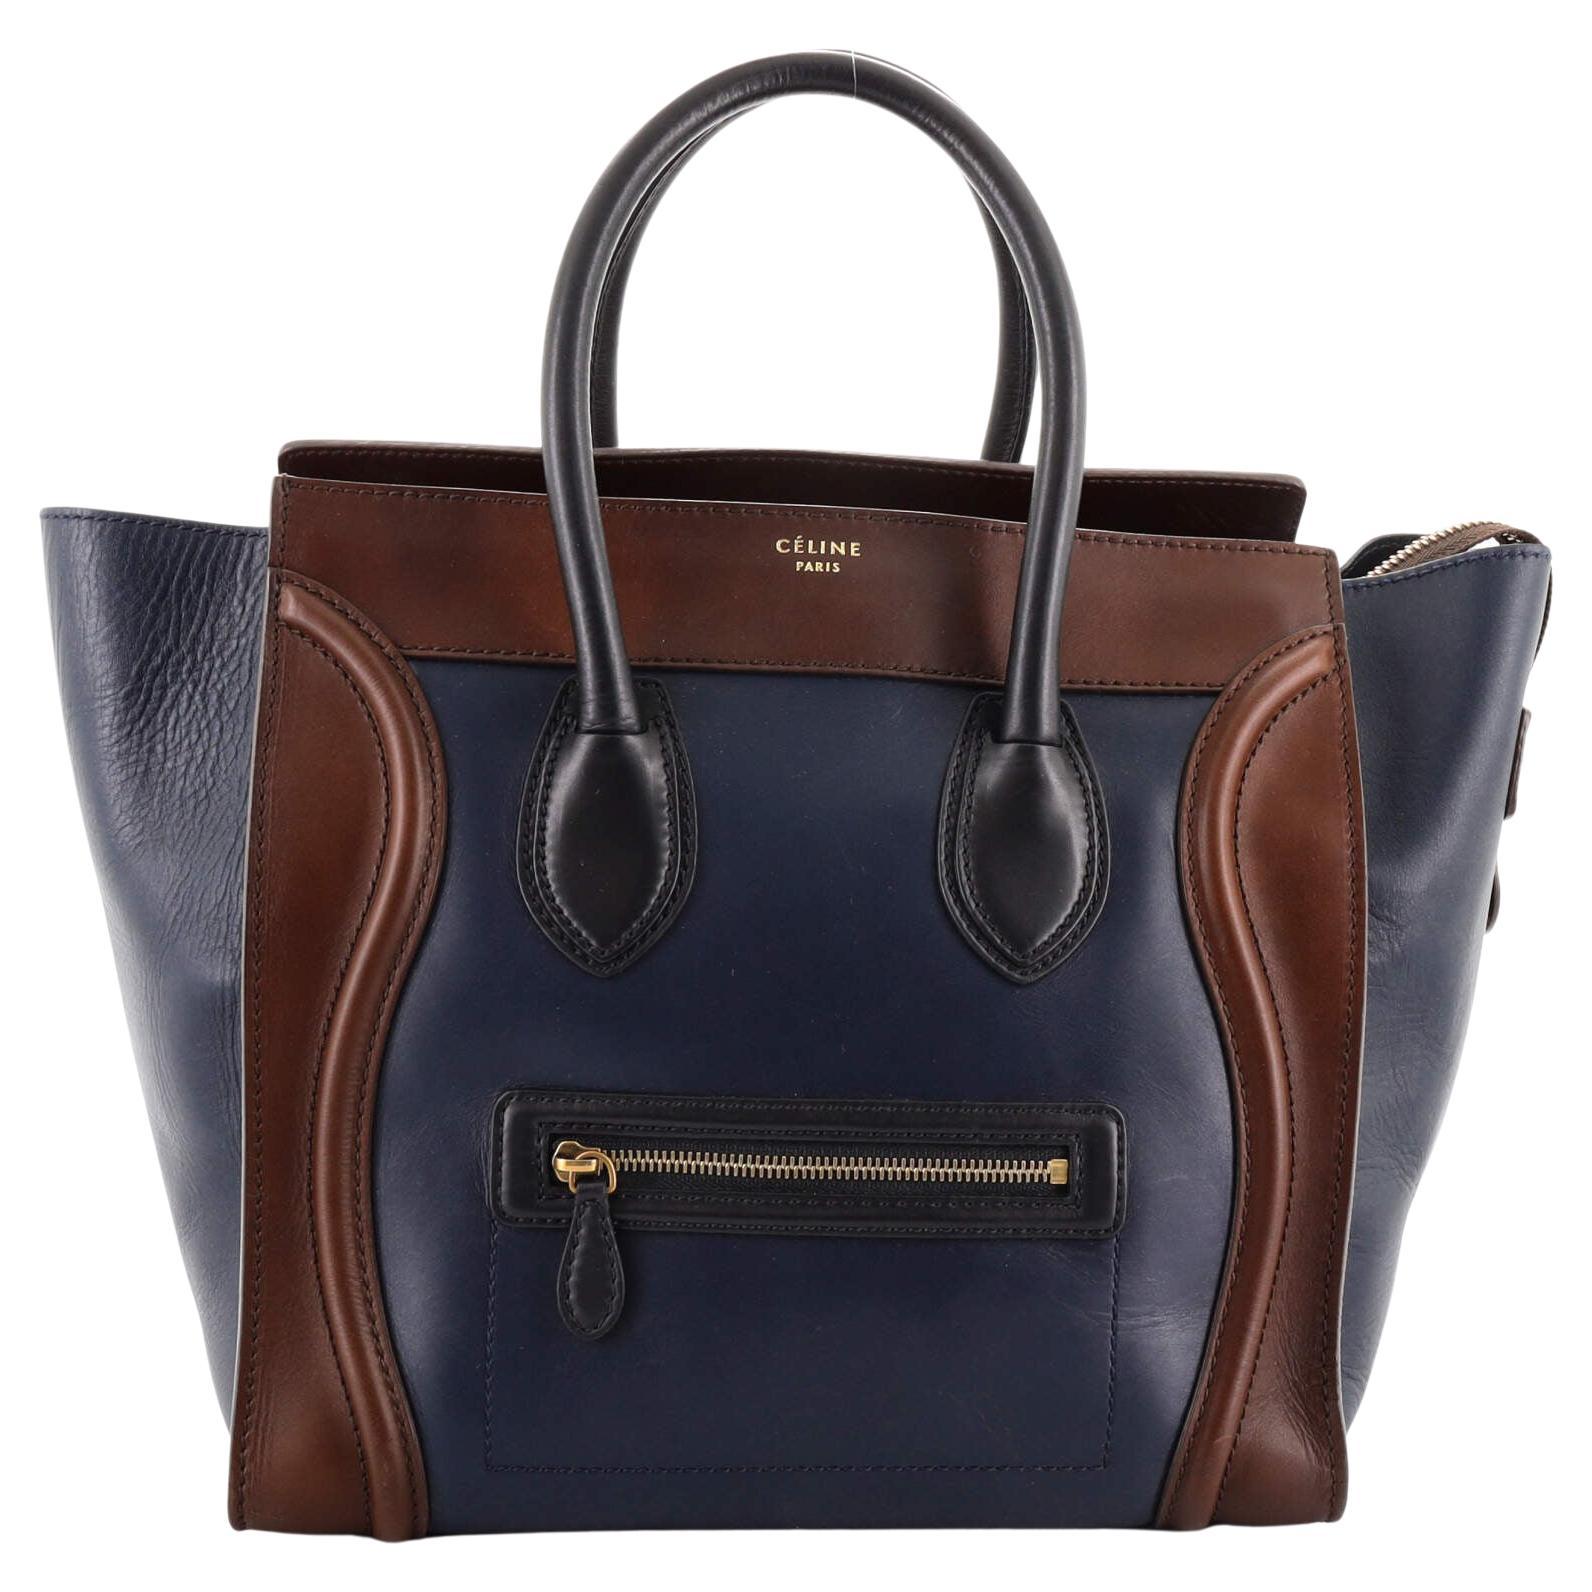 Celine Tricolor Luggage Bag Leather Micro